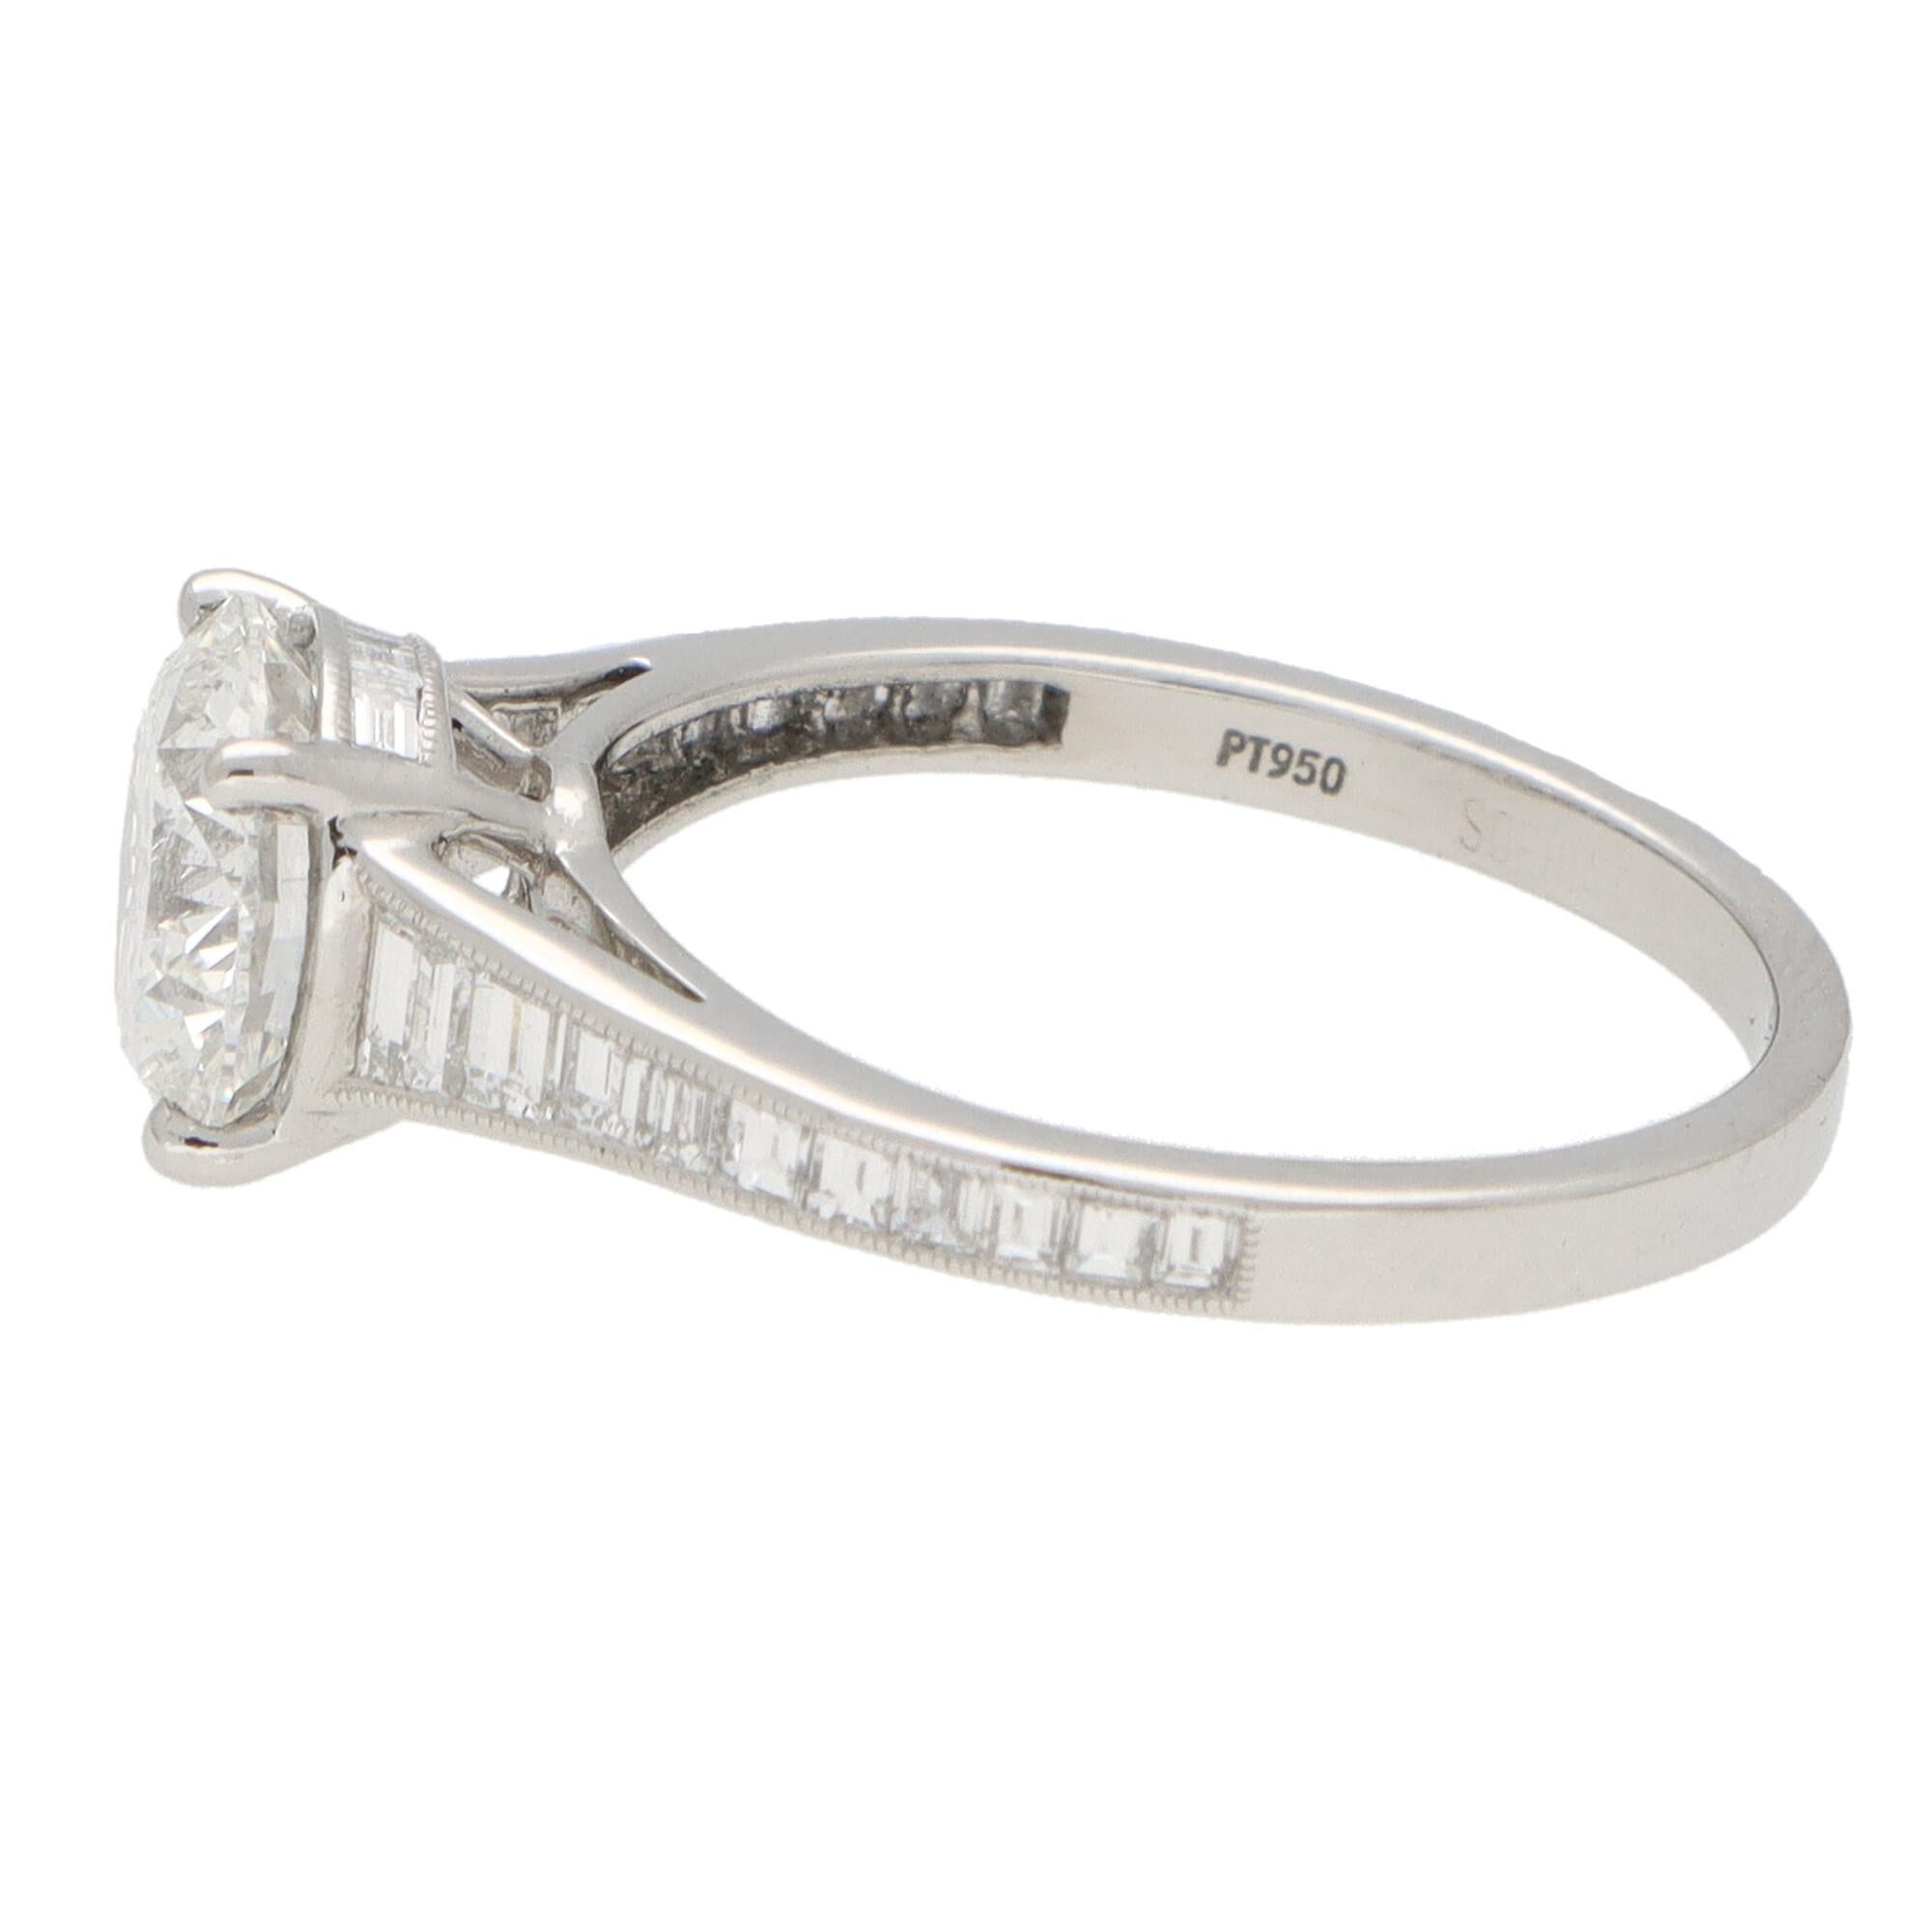 GIA Certified Art Deco Inspired Diamond Engagement Ring Set in Platinum 1